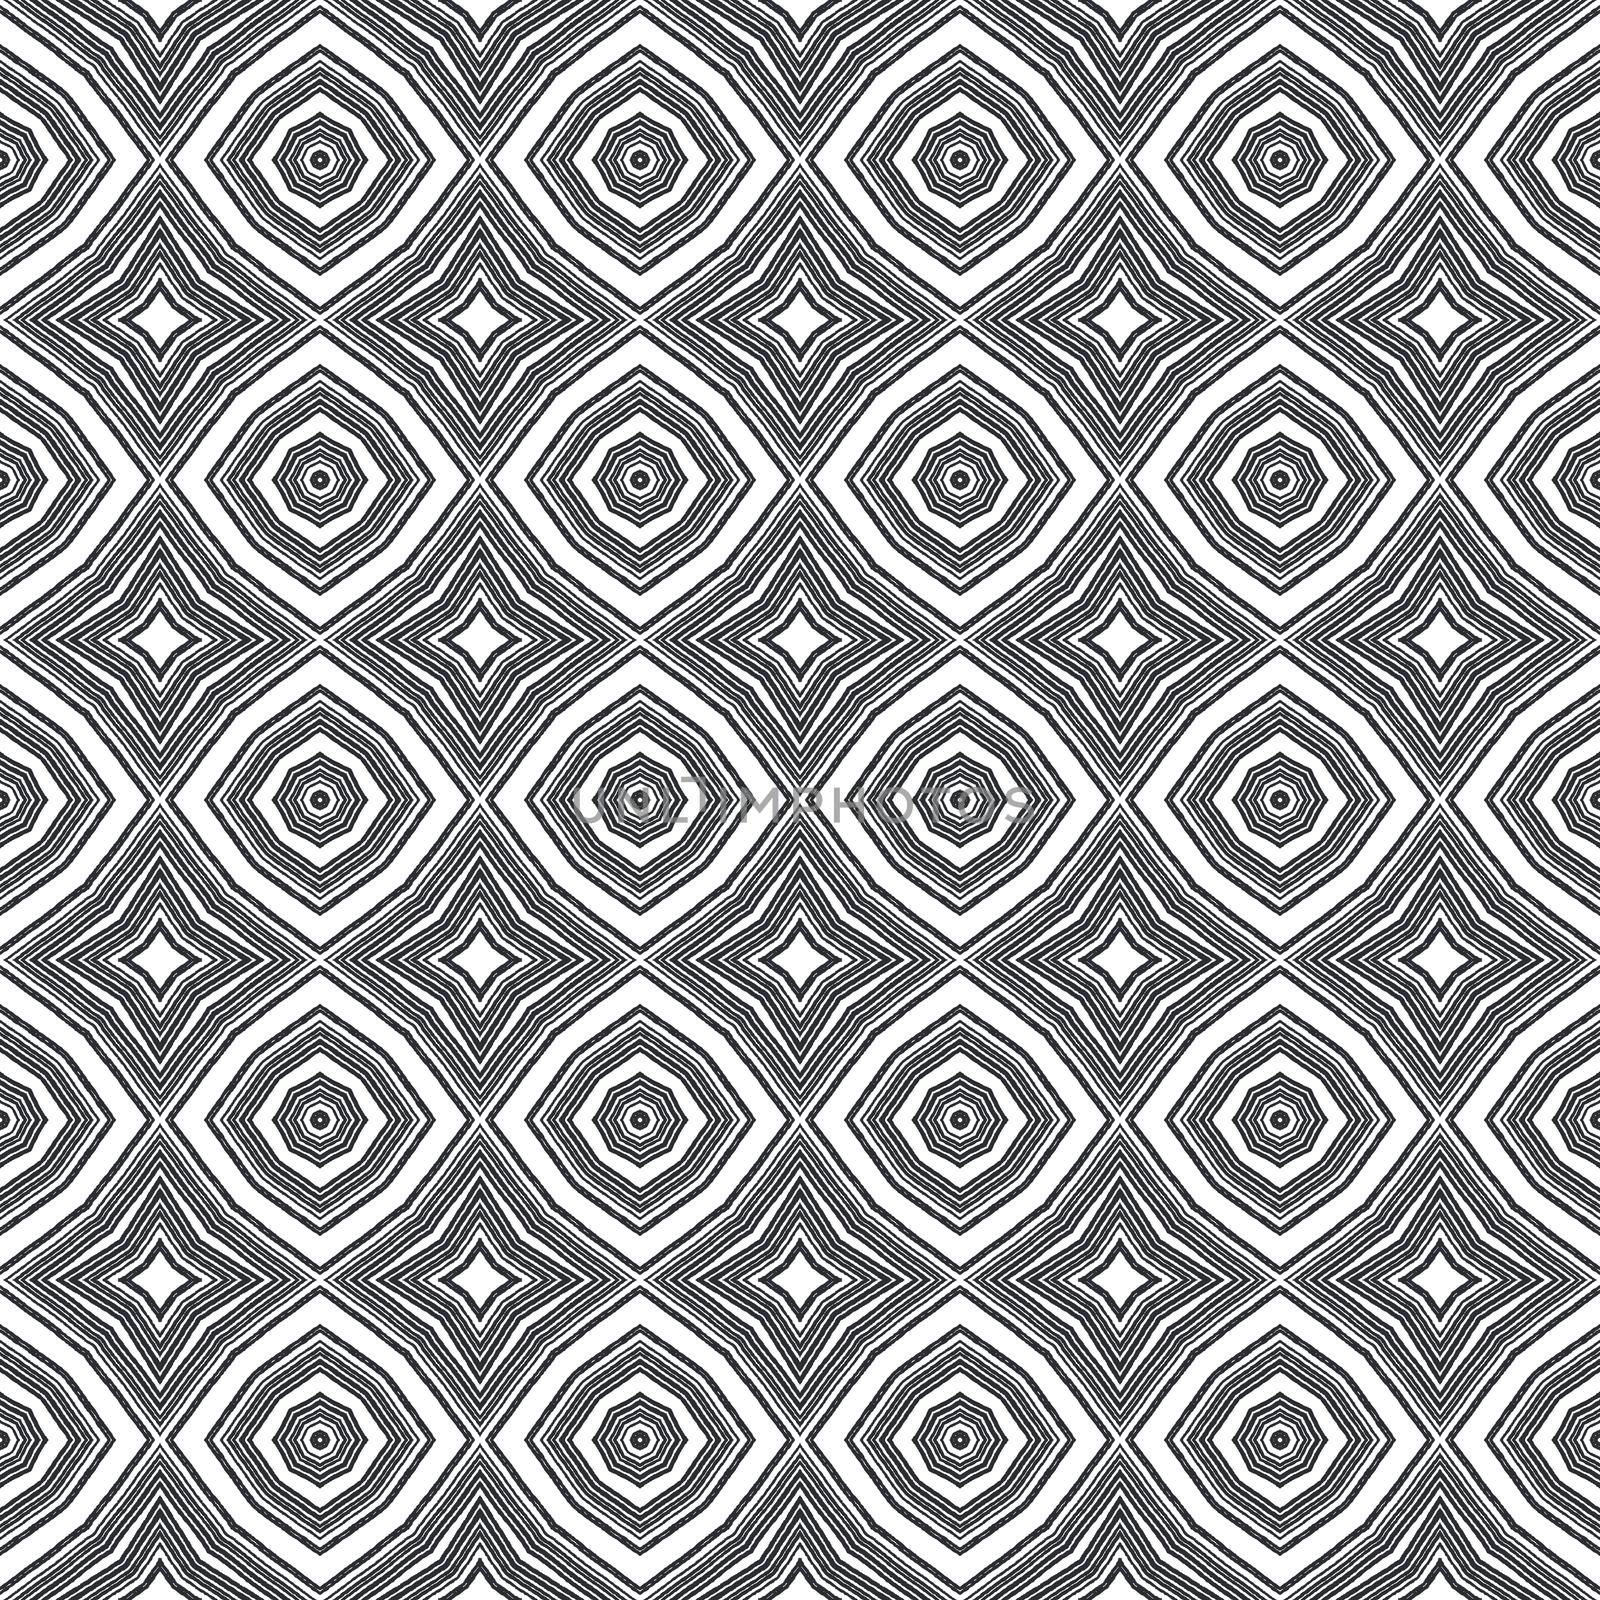 Textured stripes pattern. Black symmetrical by beginagain